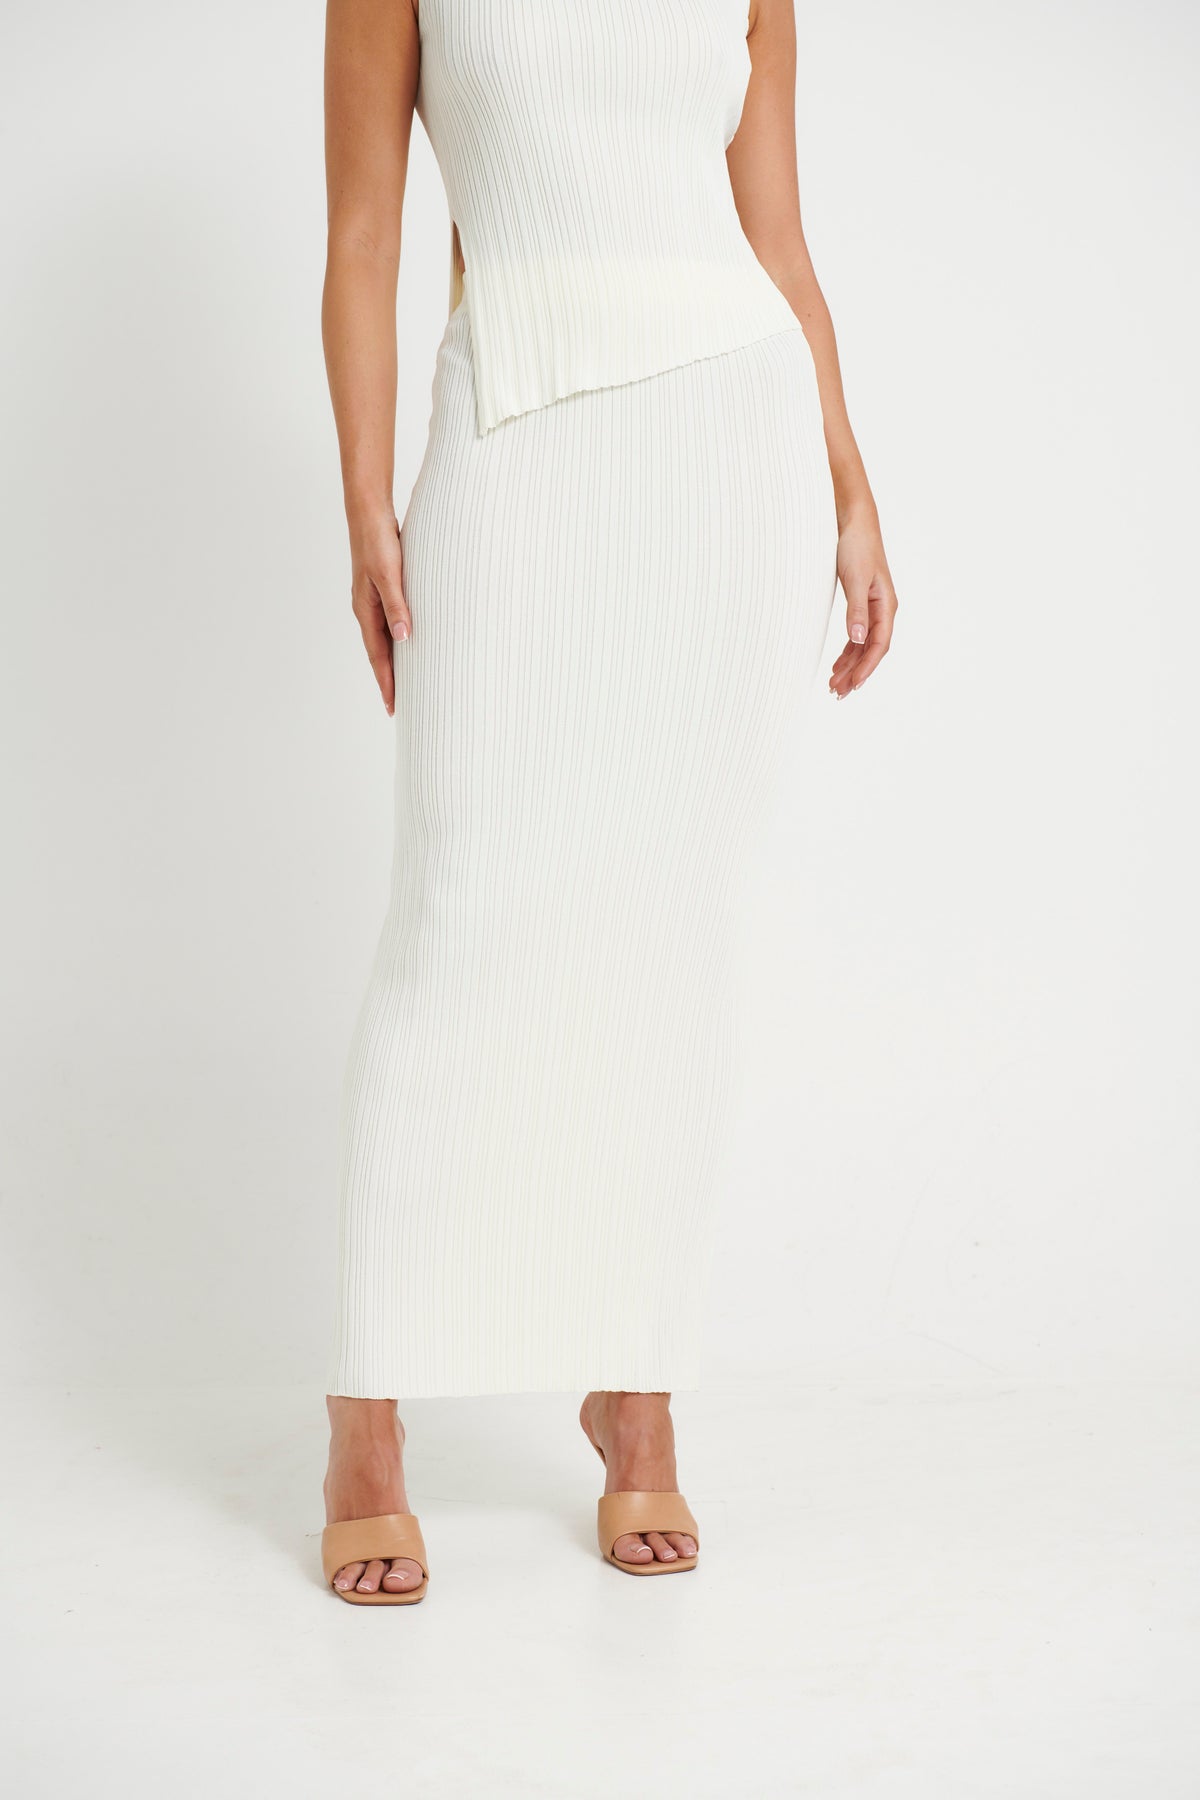 Bella Ribbed Skirt White - FINAL SALE